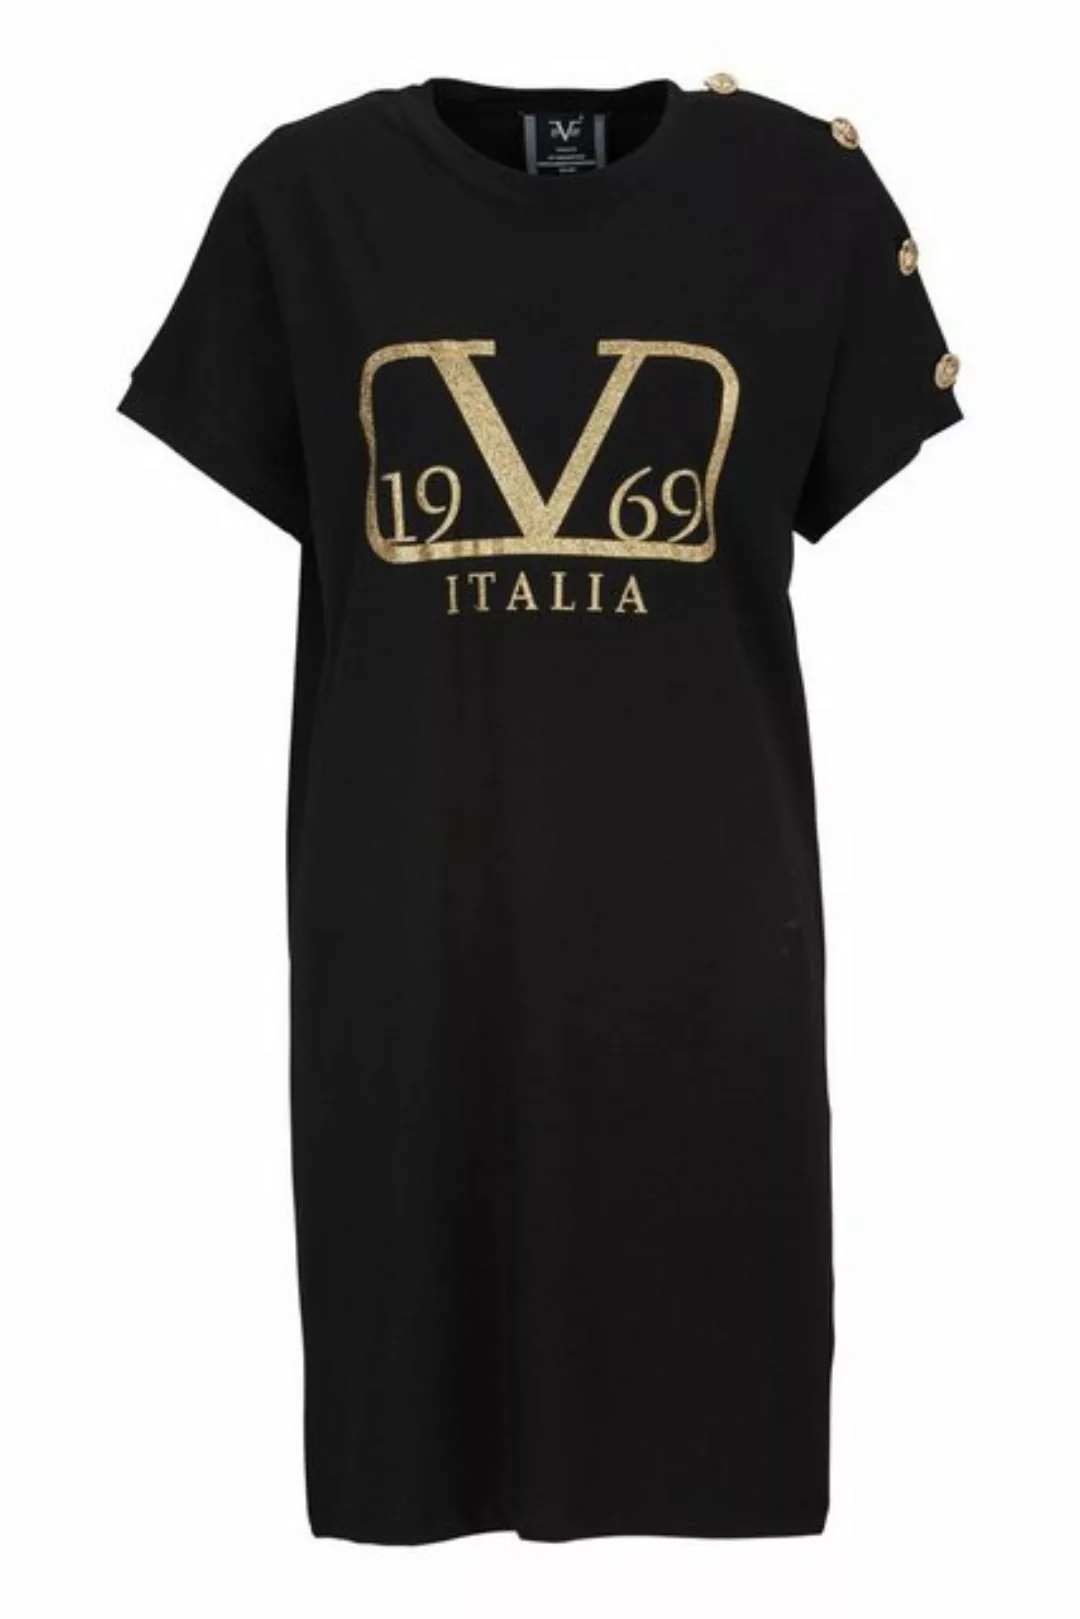 19V69 Italia by Versace T-Shirt Dana günstig online kaufen